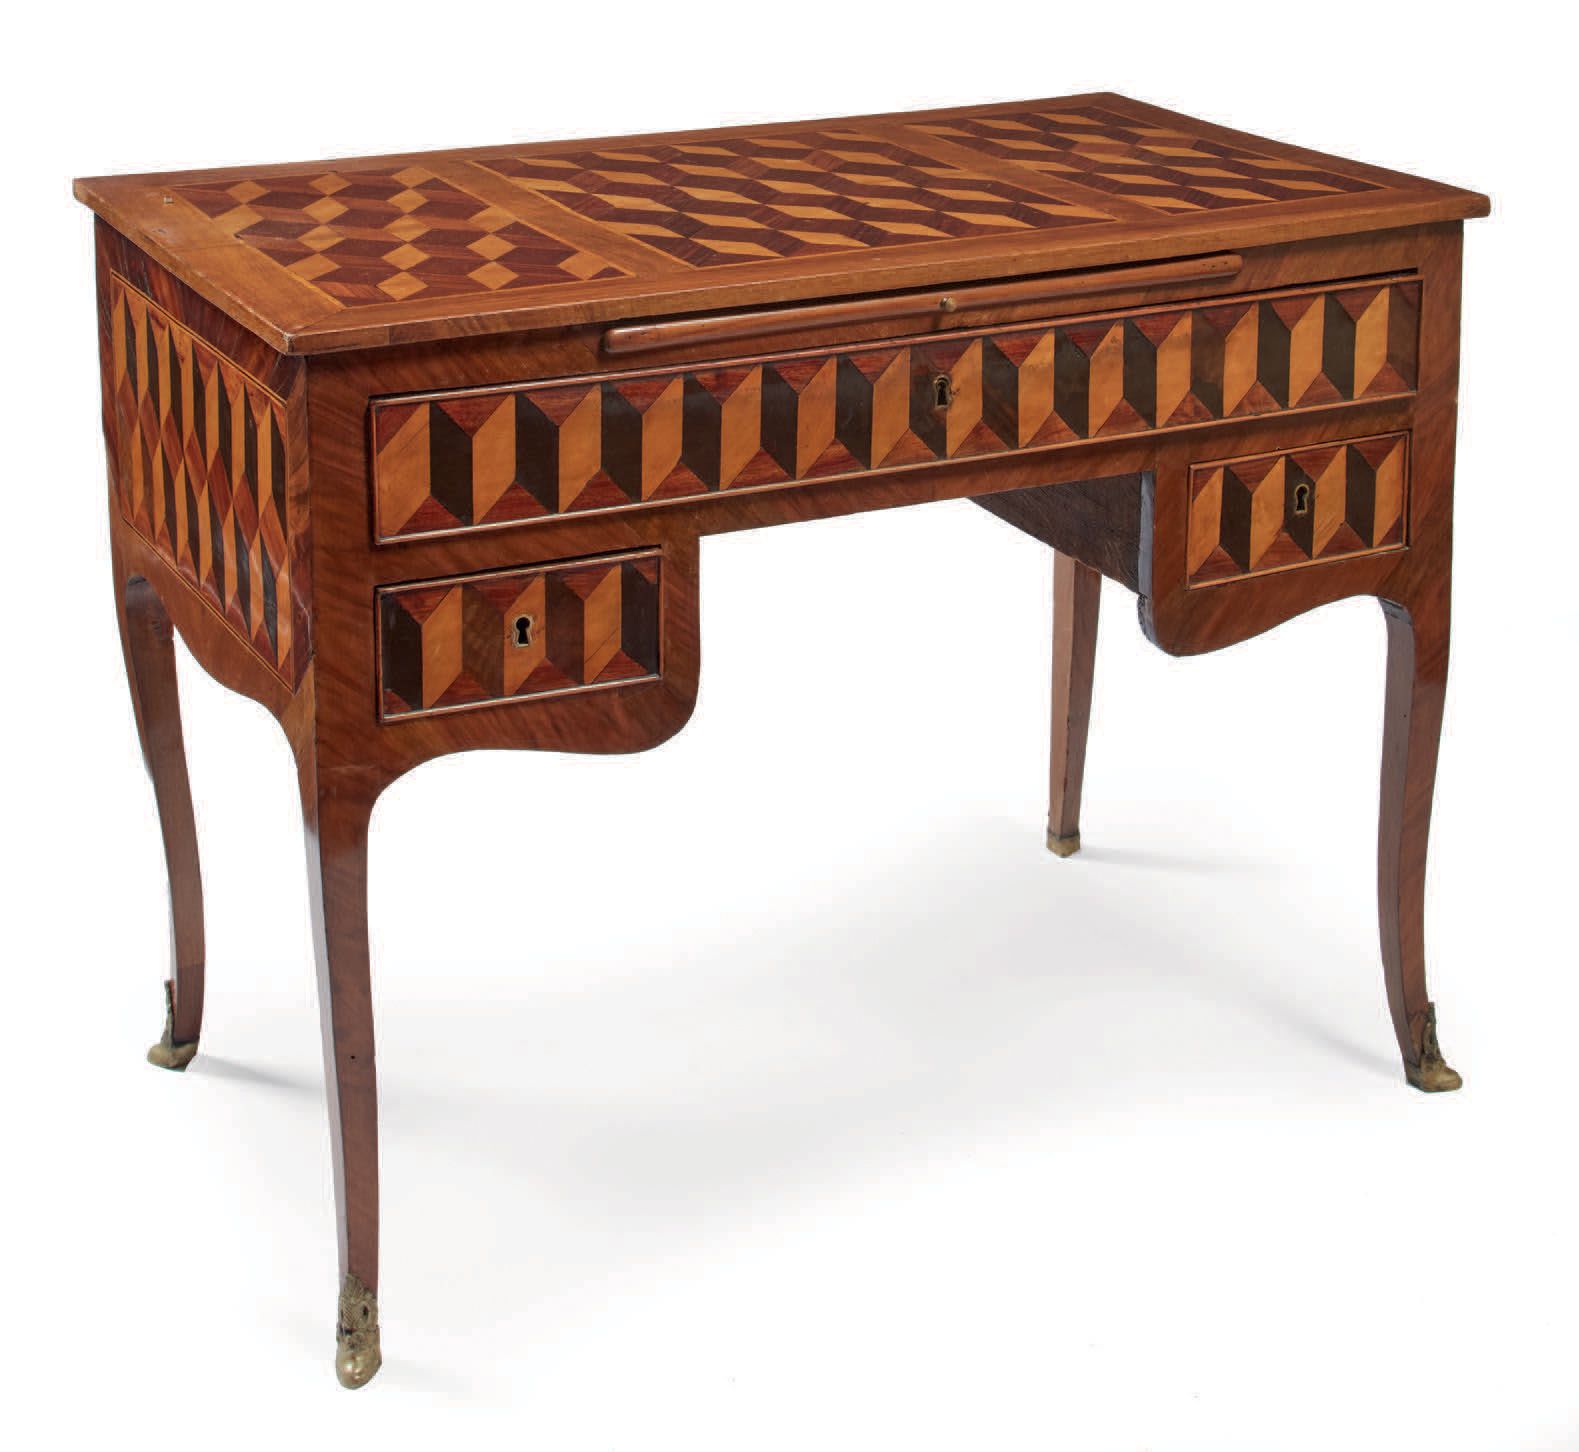 Null 镶嵌胡桃木，浅色和染色的木质书桌，略微摇晃的腿，三个抽屉和一个滑动的顶部，镶嵌着立方体的装饰，脚上装饰着鎏金的青铜贴花，意大利，18世纪末
两把钥匙（&hellip;